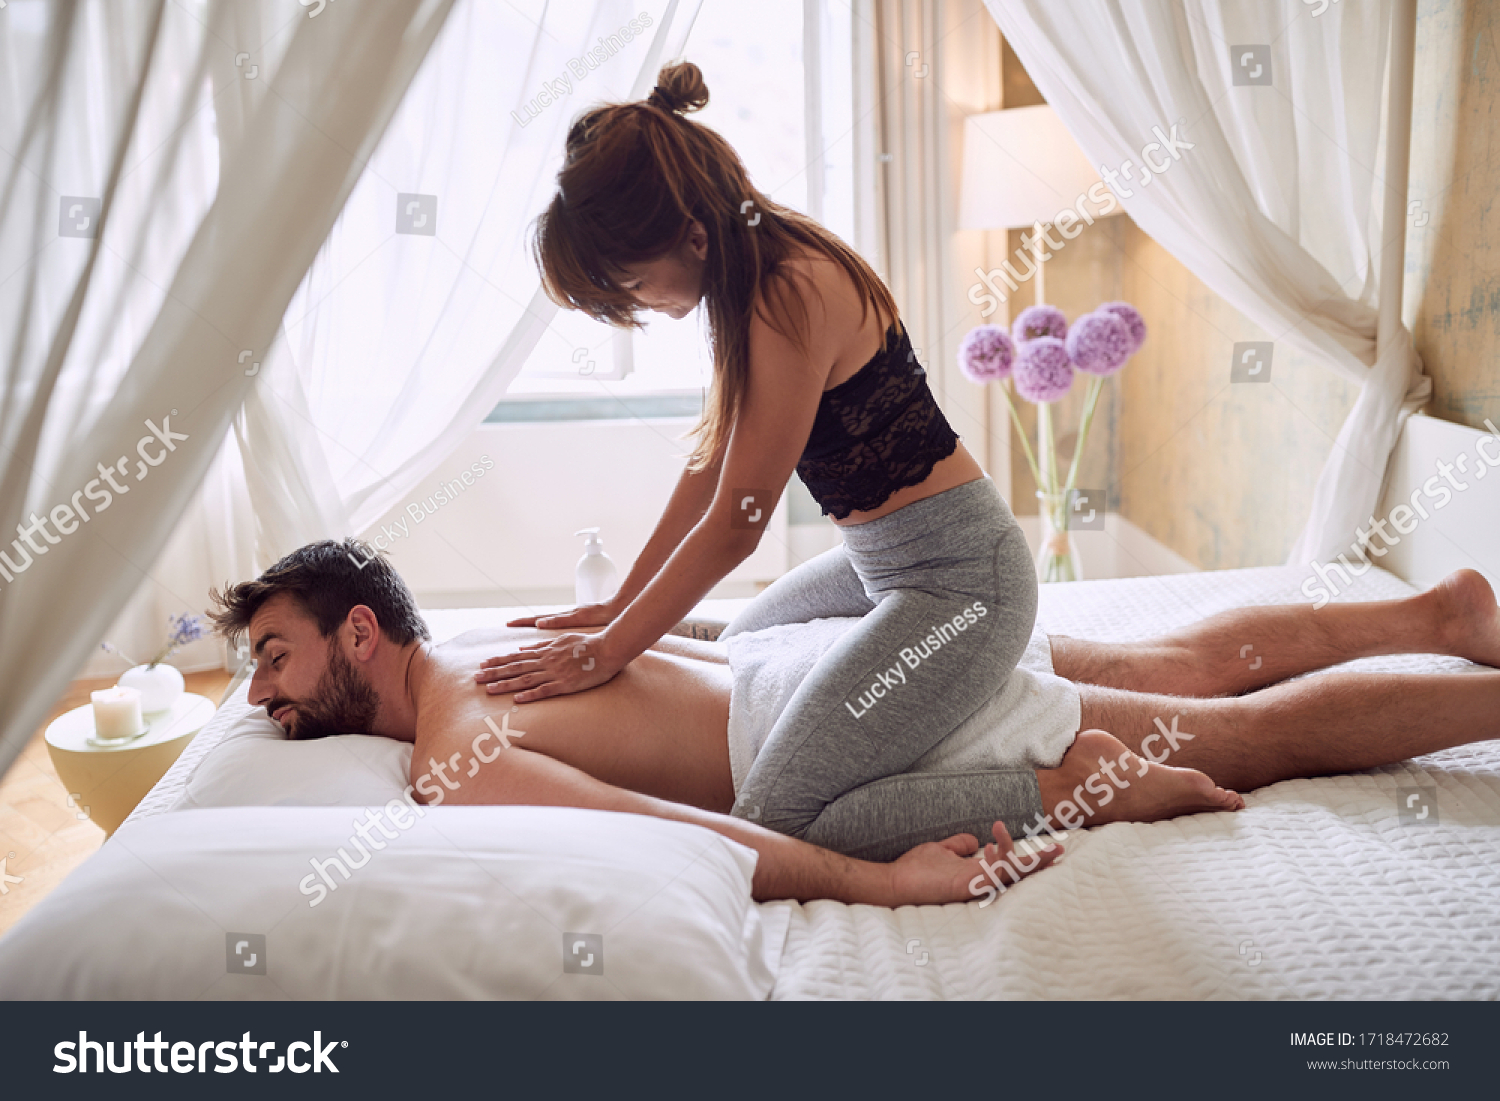 How to erotic massage